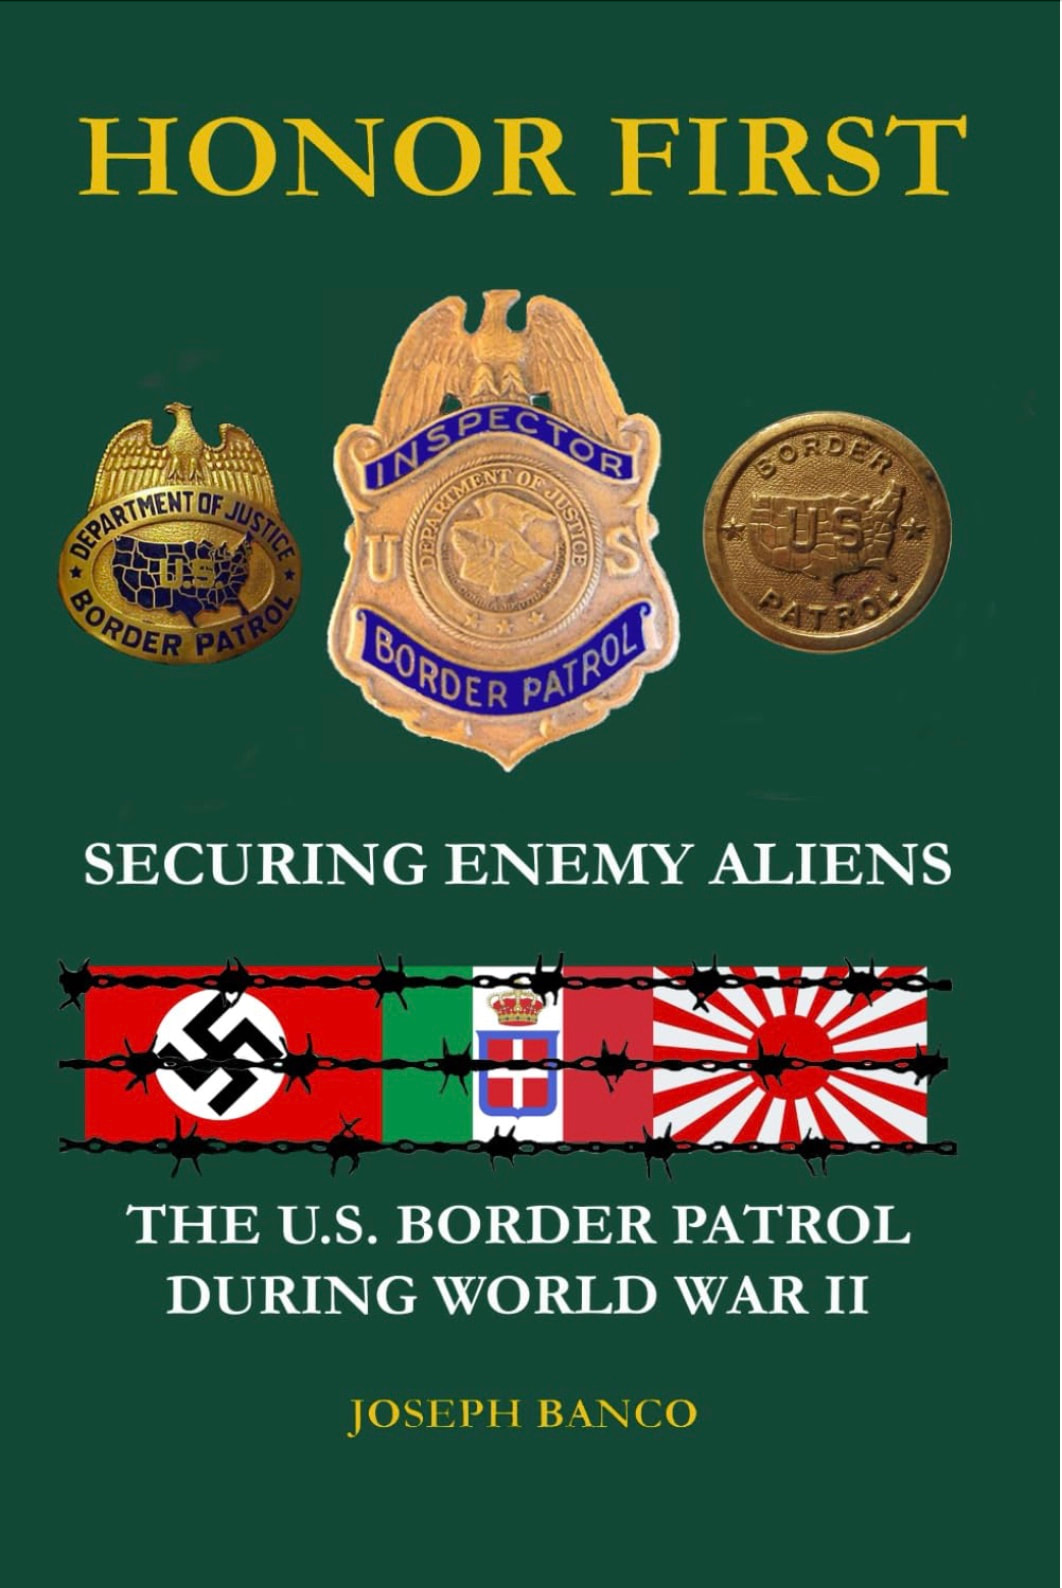 HONOR FIRST: Securing Enemy Aliens - U.S. Border Patrol During World War II